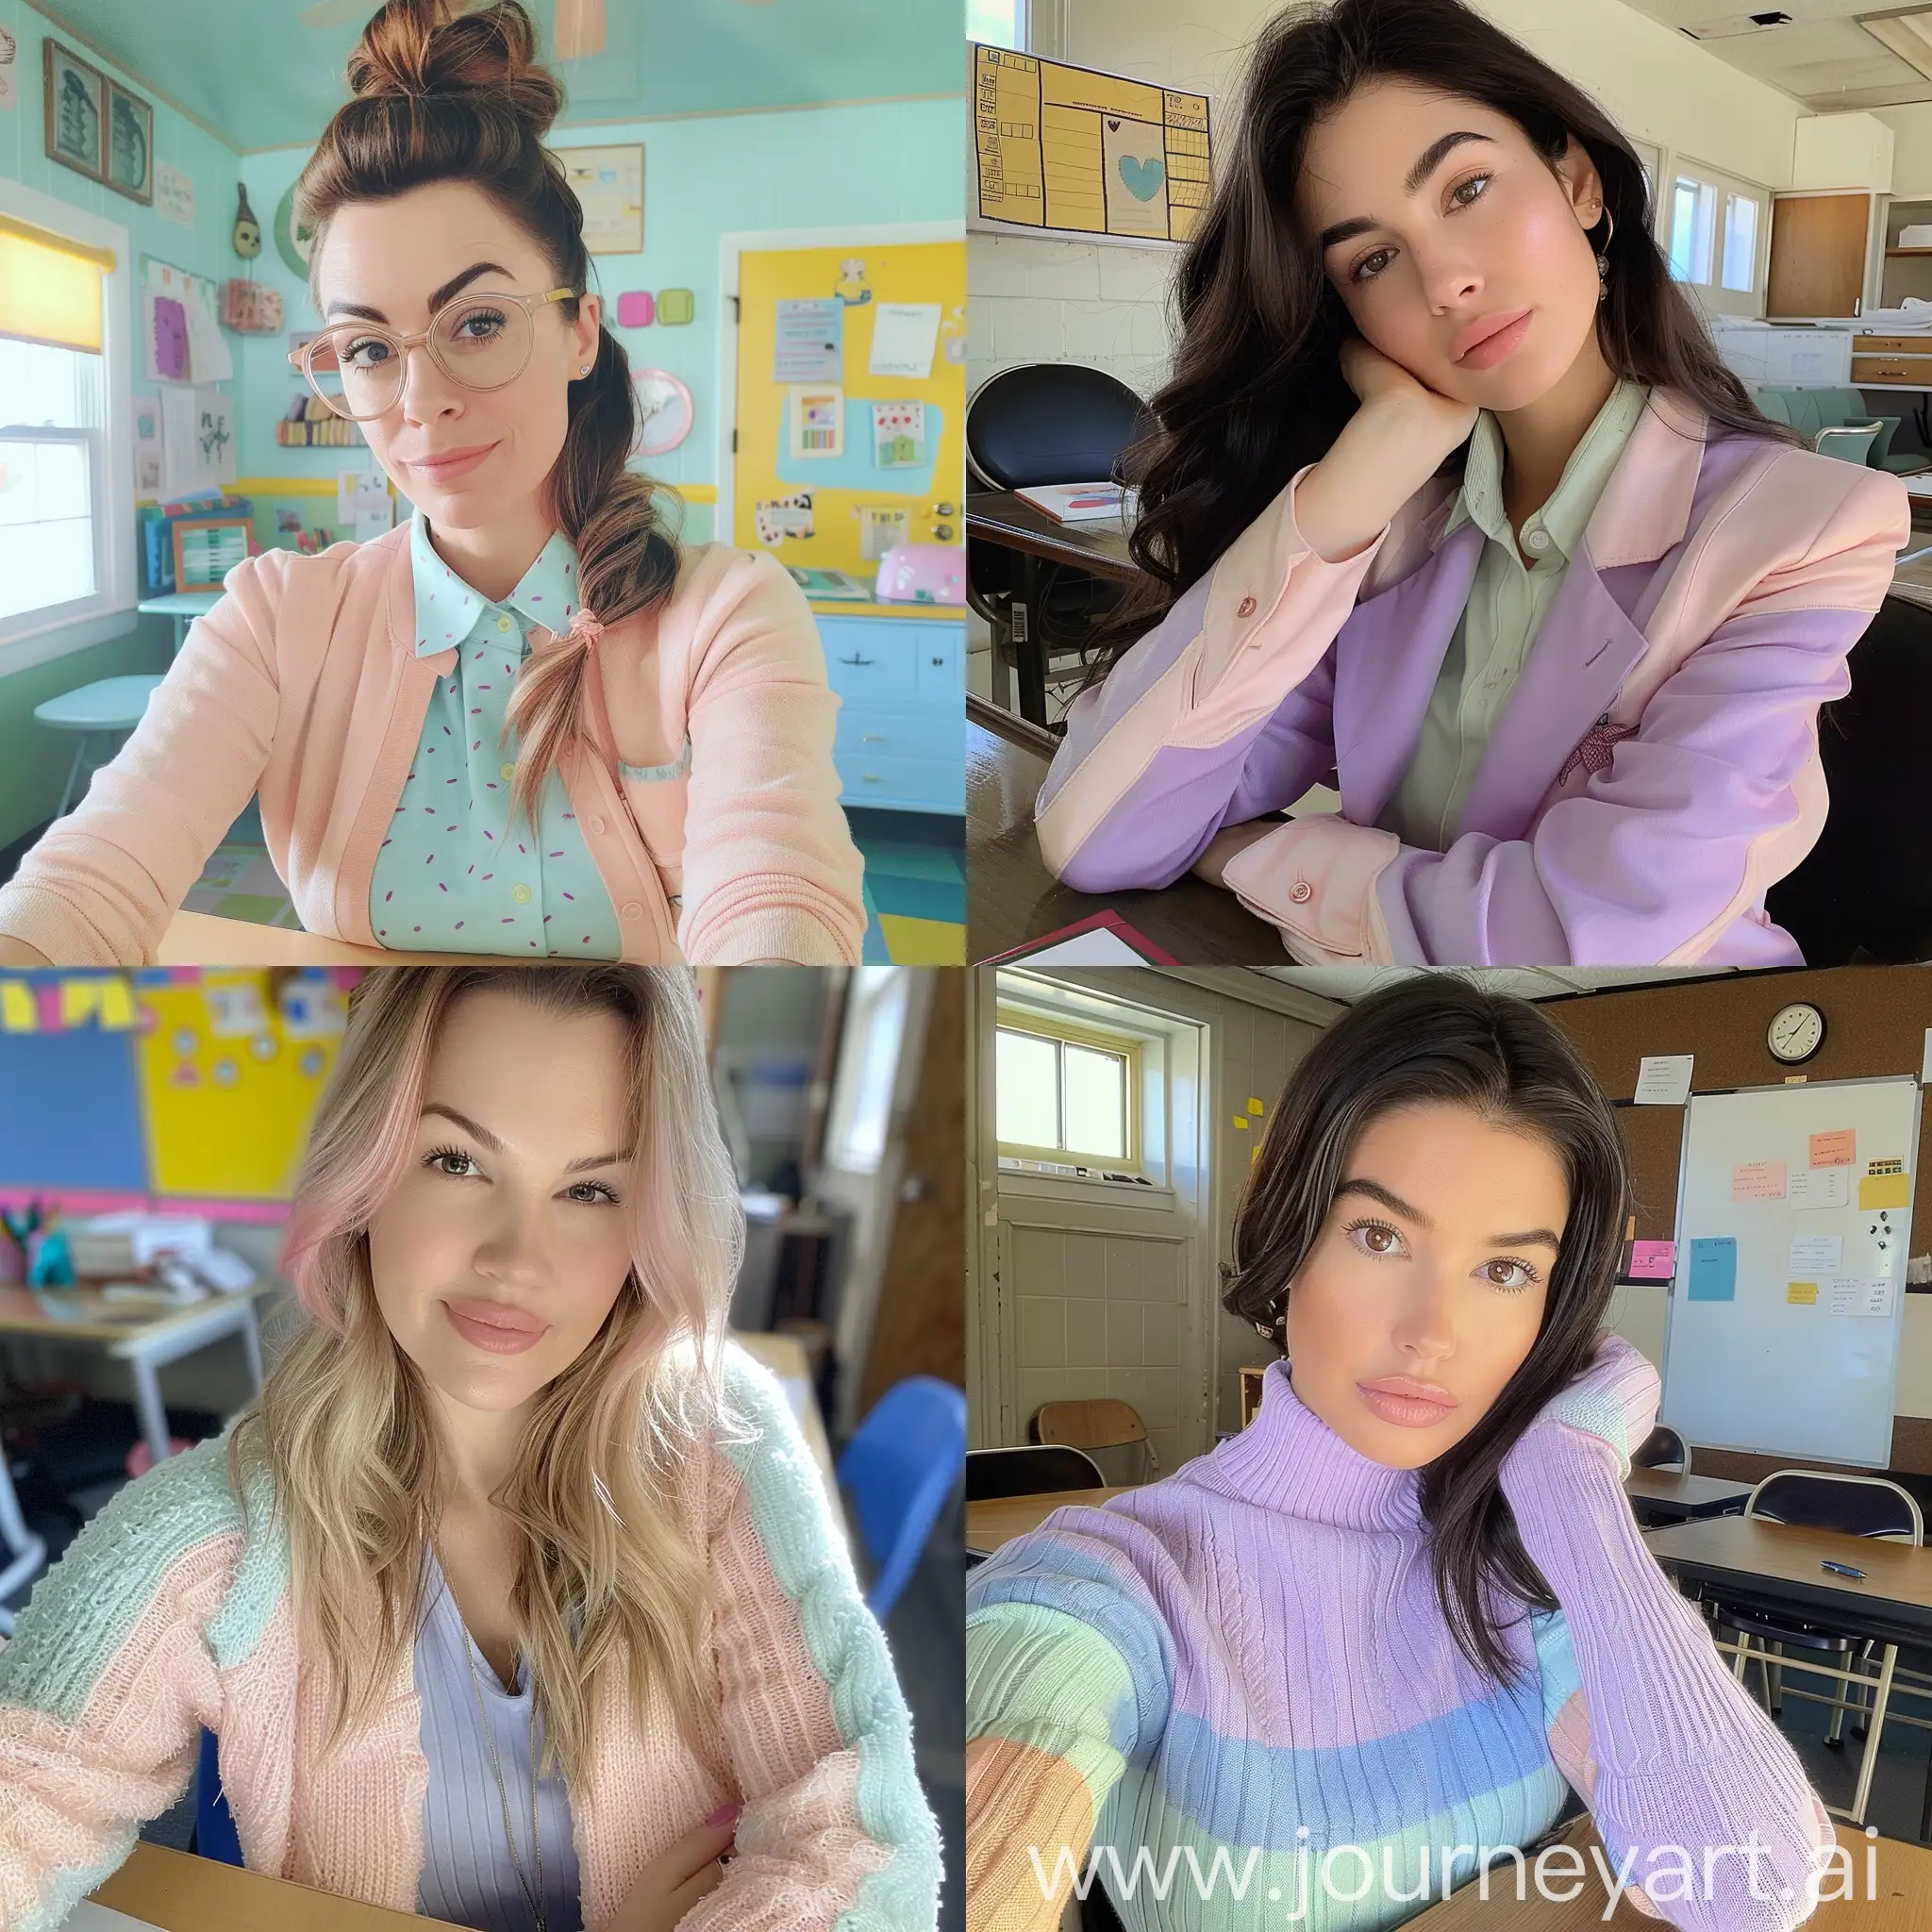 Chic-Elementary-School-Teacher-at-Desk-in-Pastel-Tones